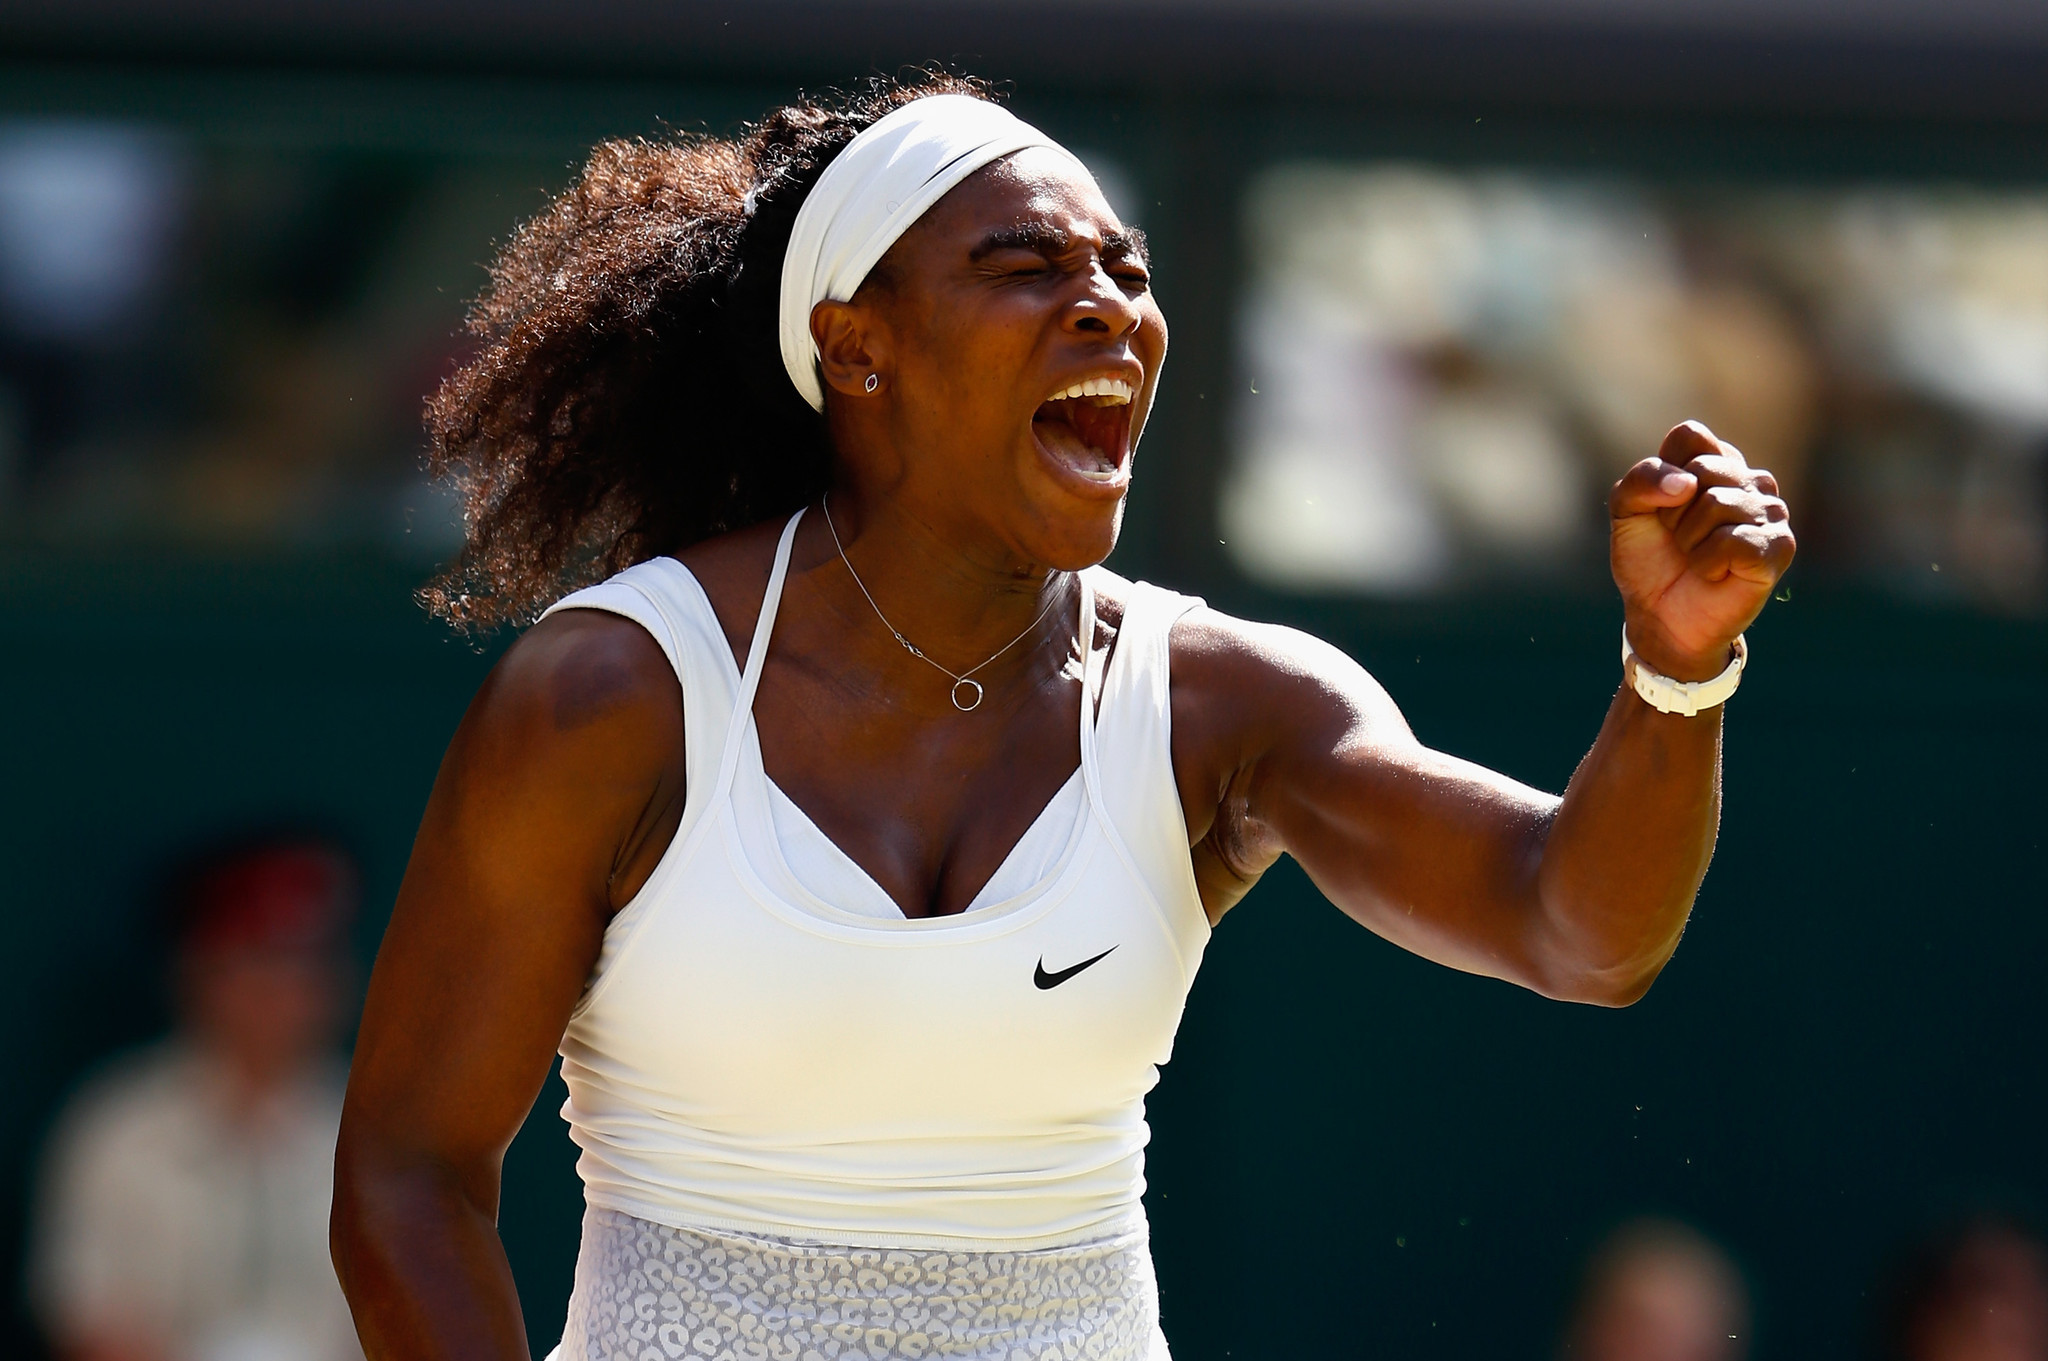 Serena Williams wins Wimbledon - The Morning Call2048 x 1361